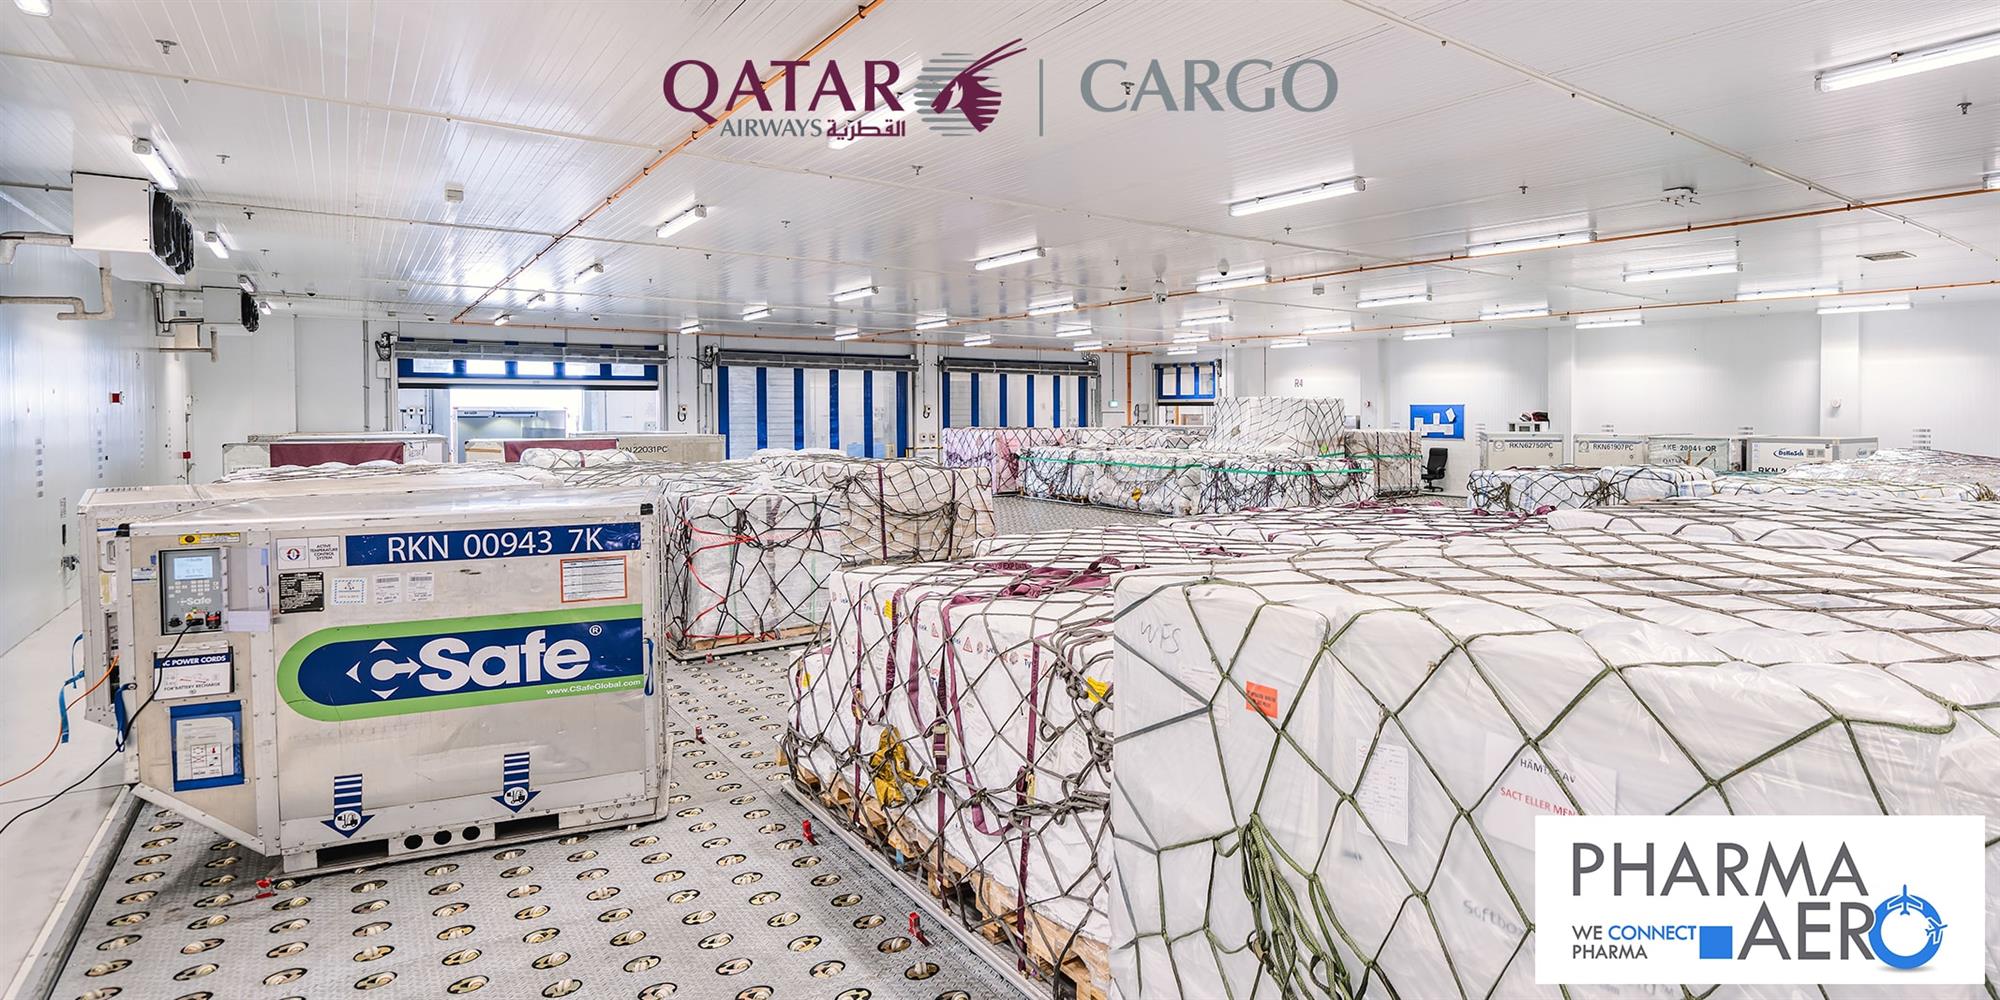 Self Photos / Files - 2021_Qatar Airways Cargo joins Pharma.aero